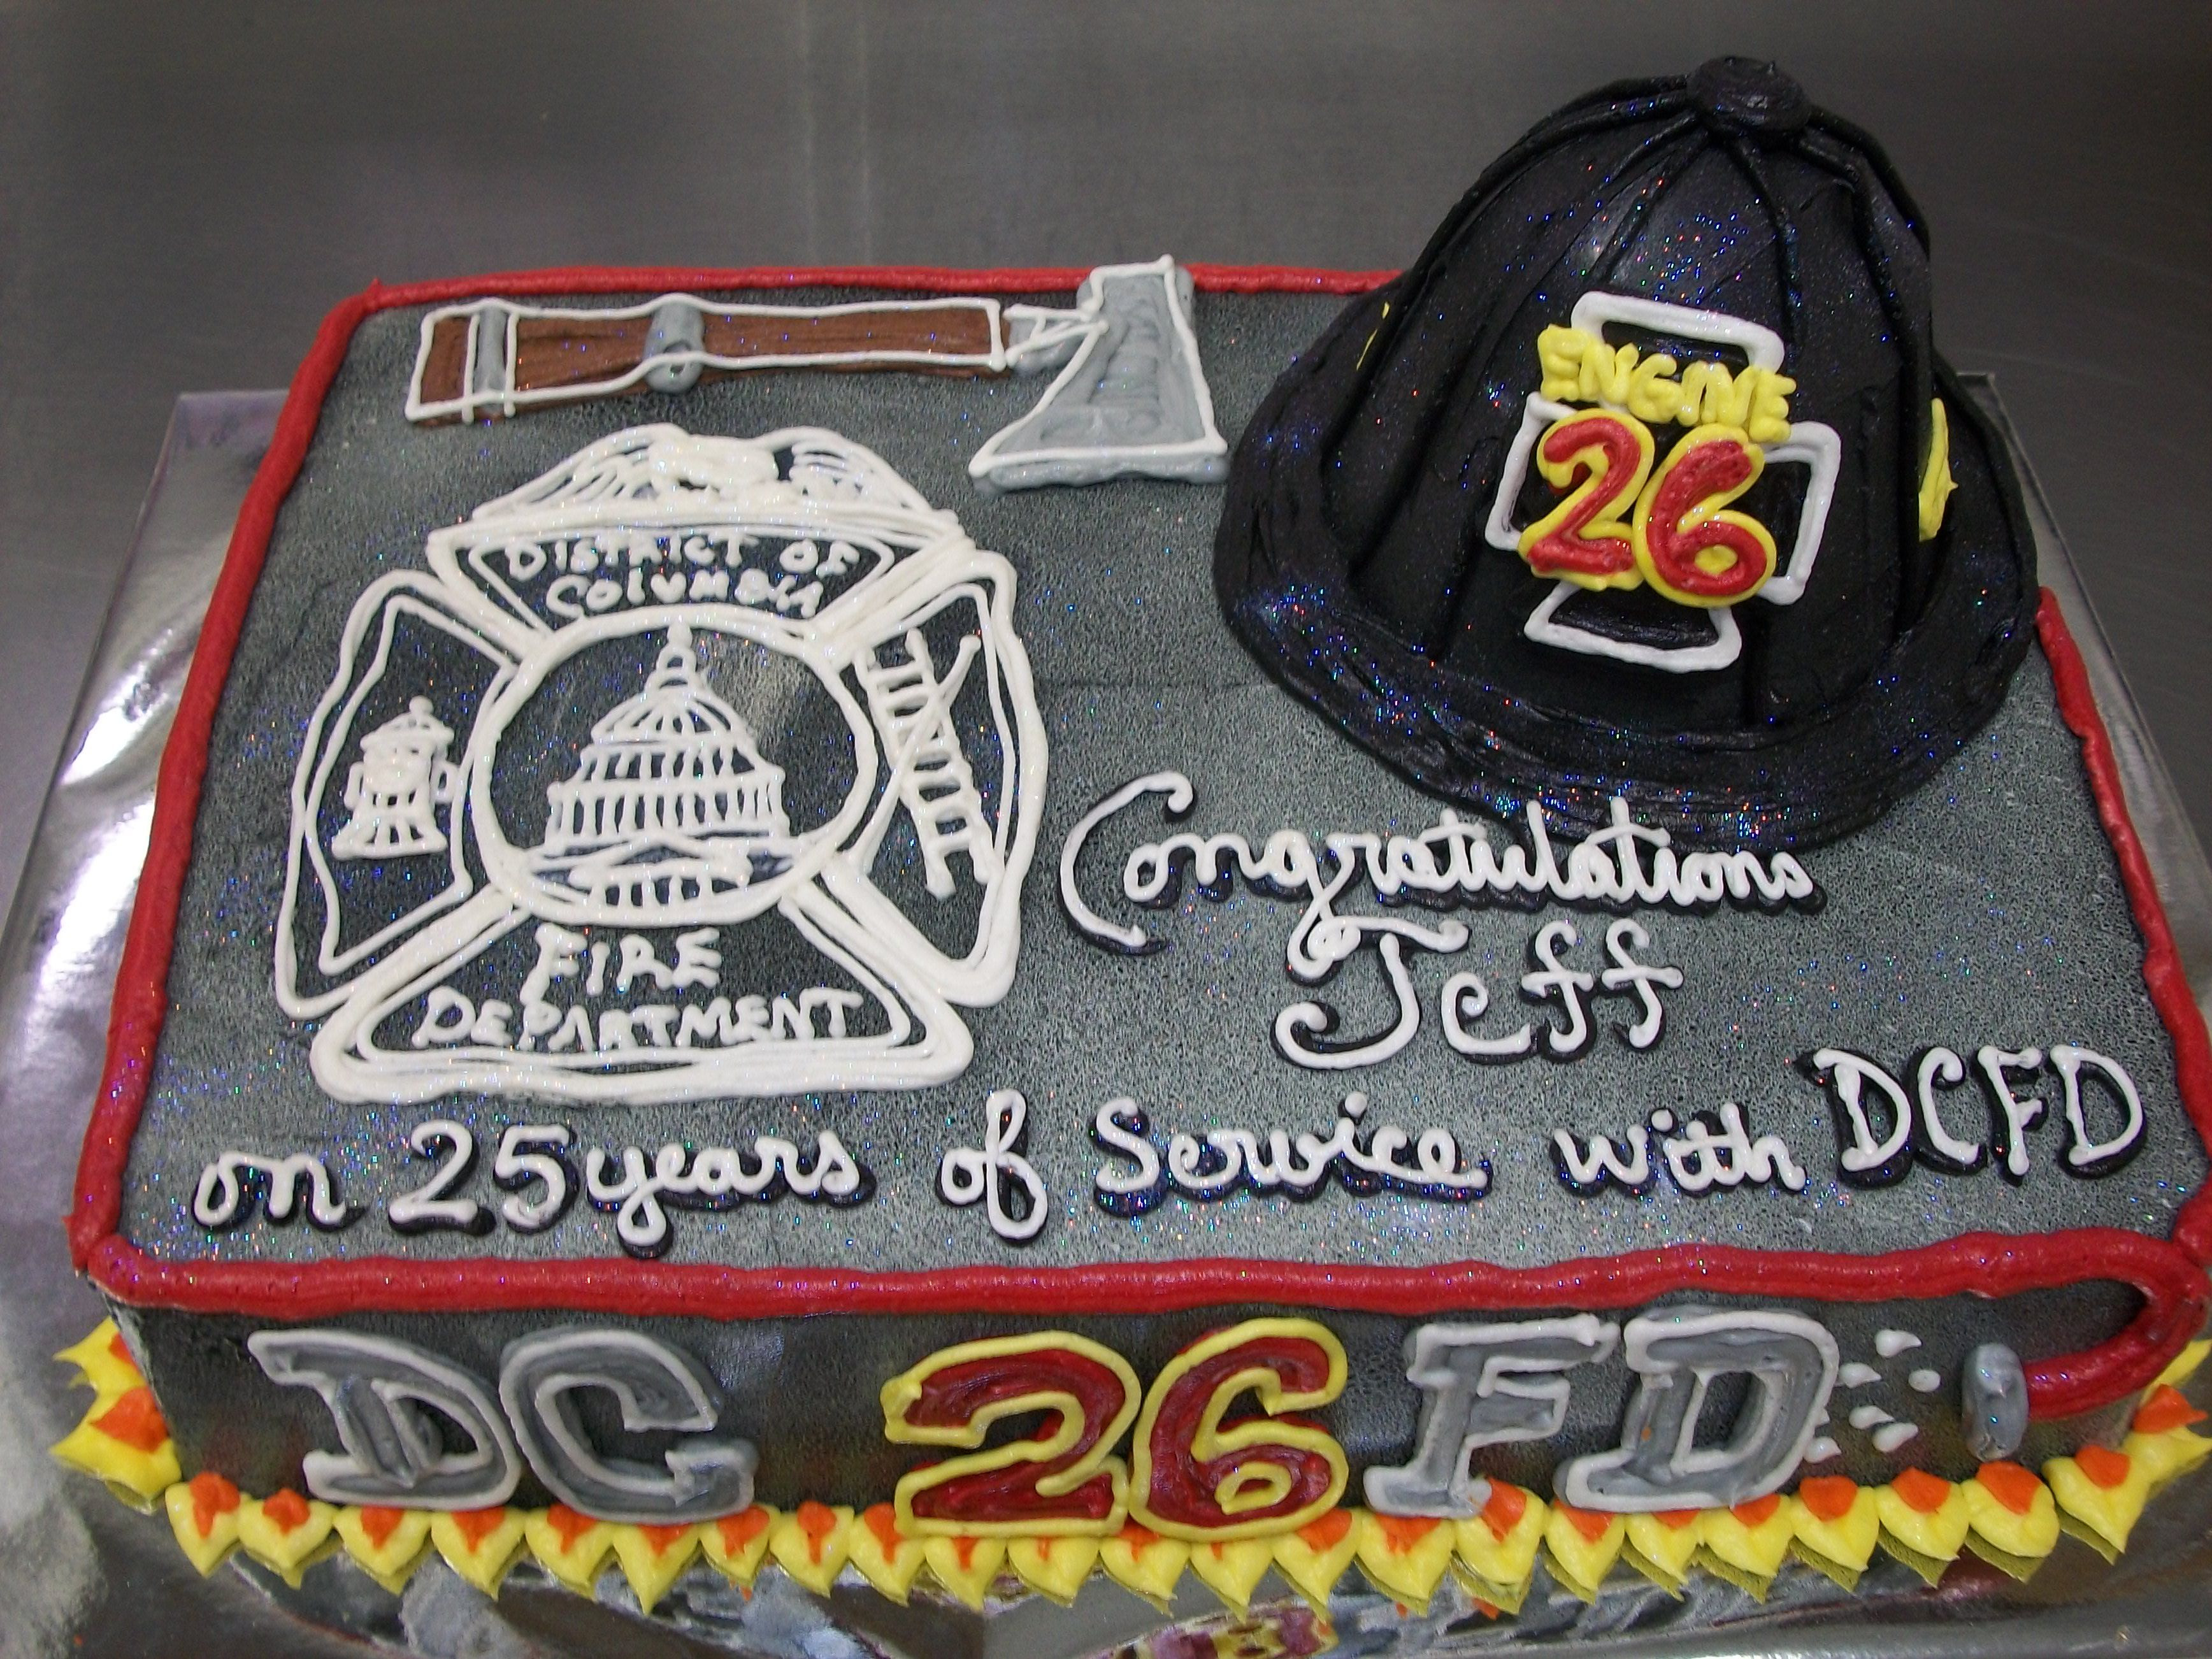 Fireman Retirement Party Ideas
 Firefighter retirement cake